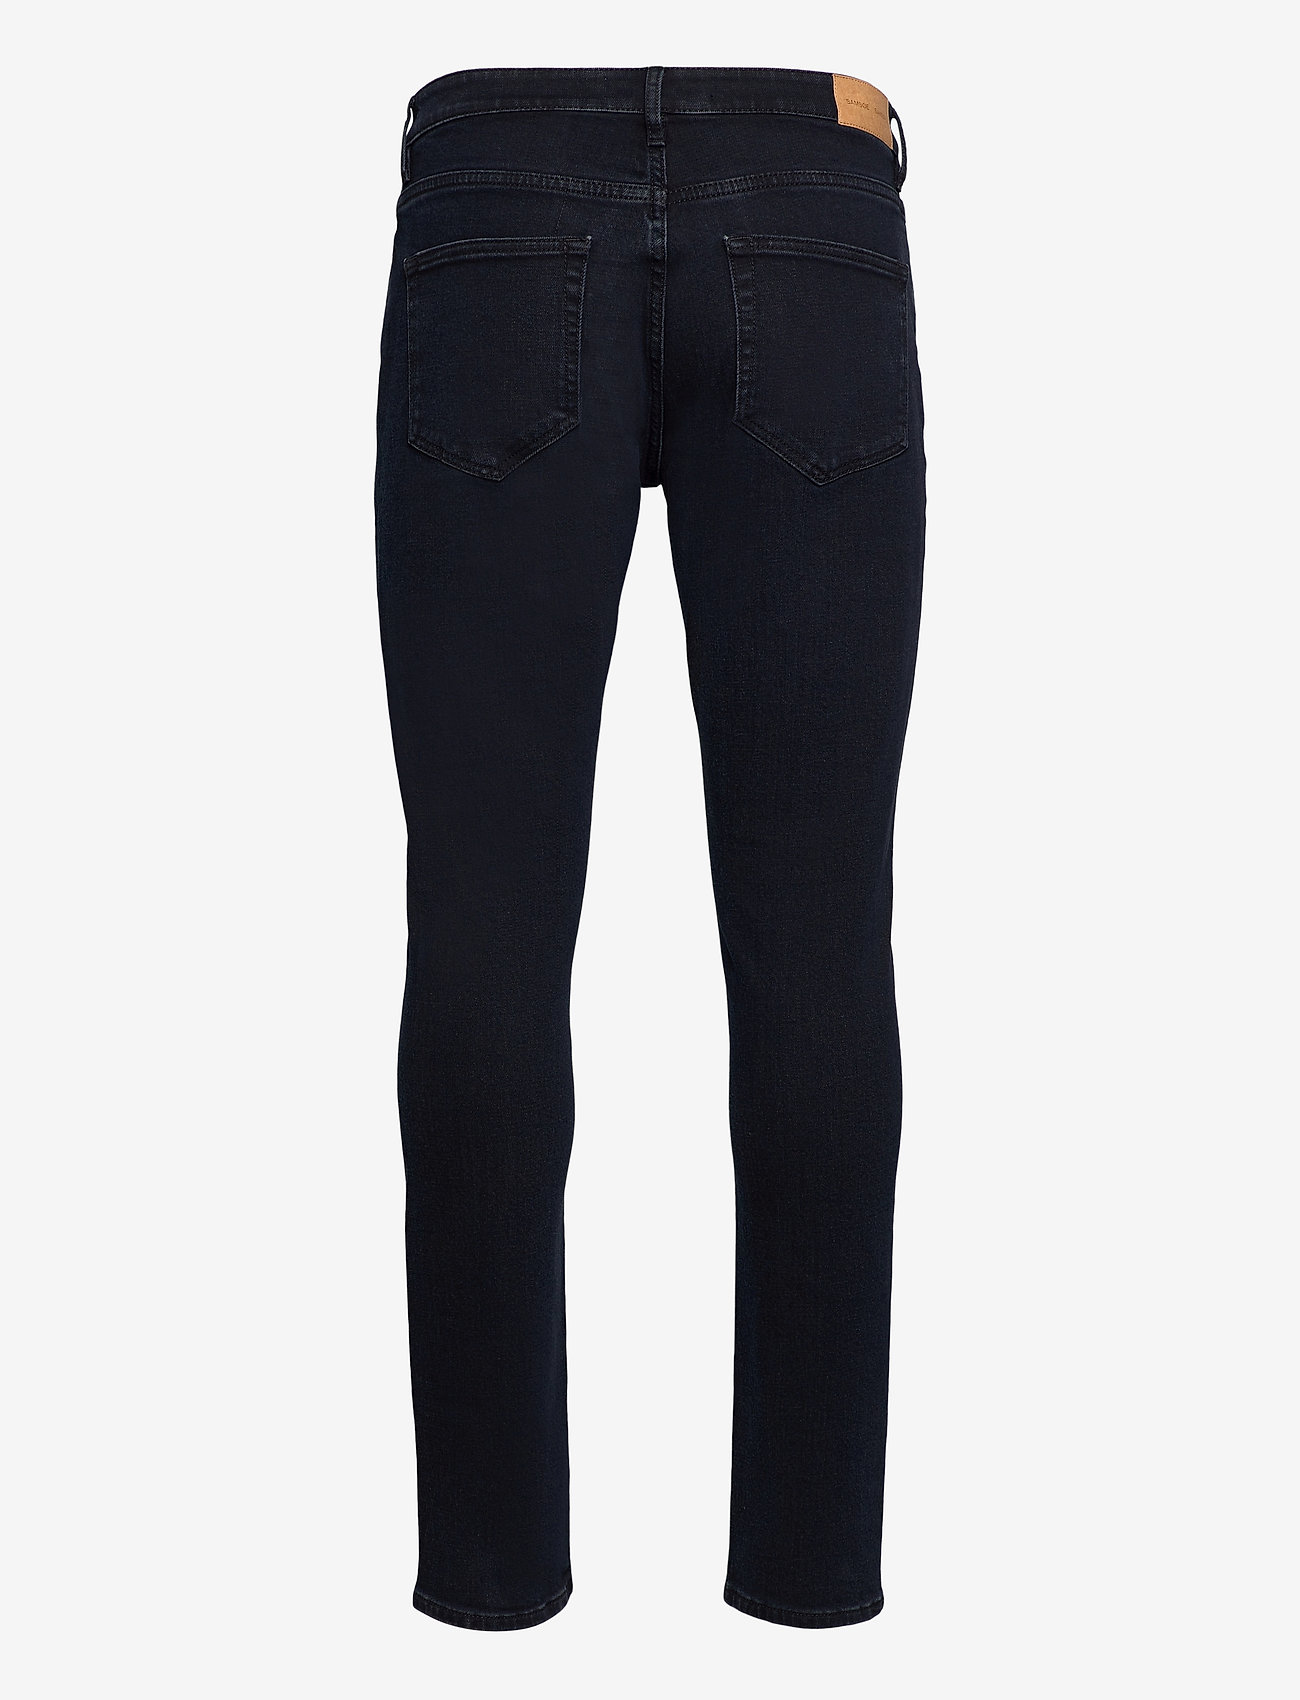 Samsøe Samsøe - Stefan jeans 11352 - nordic style - midnight - 1